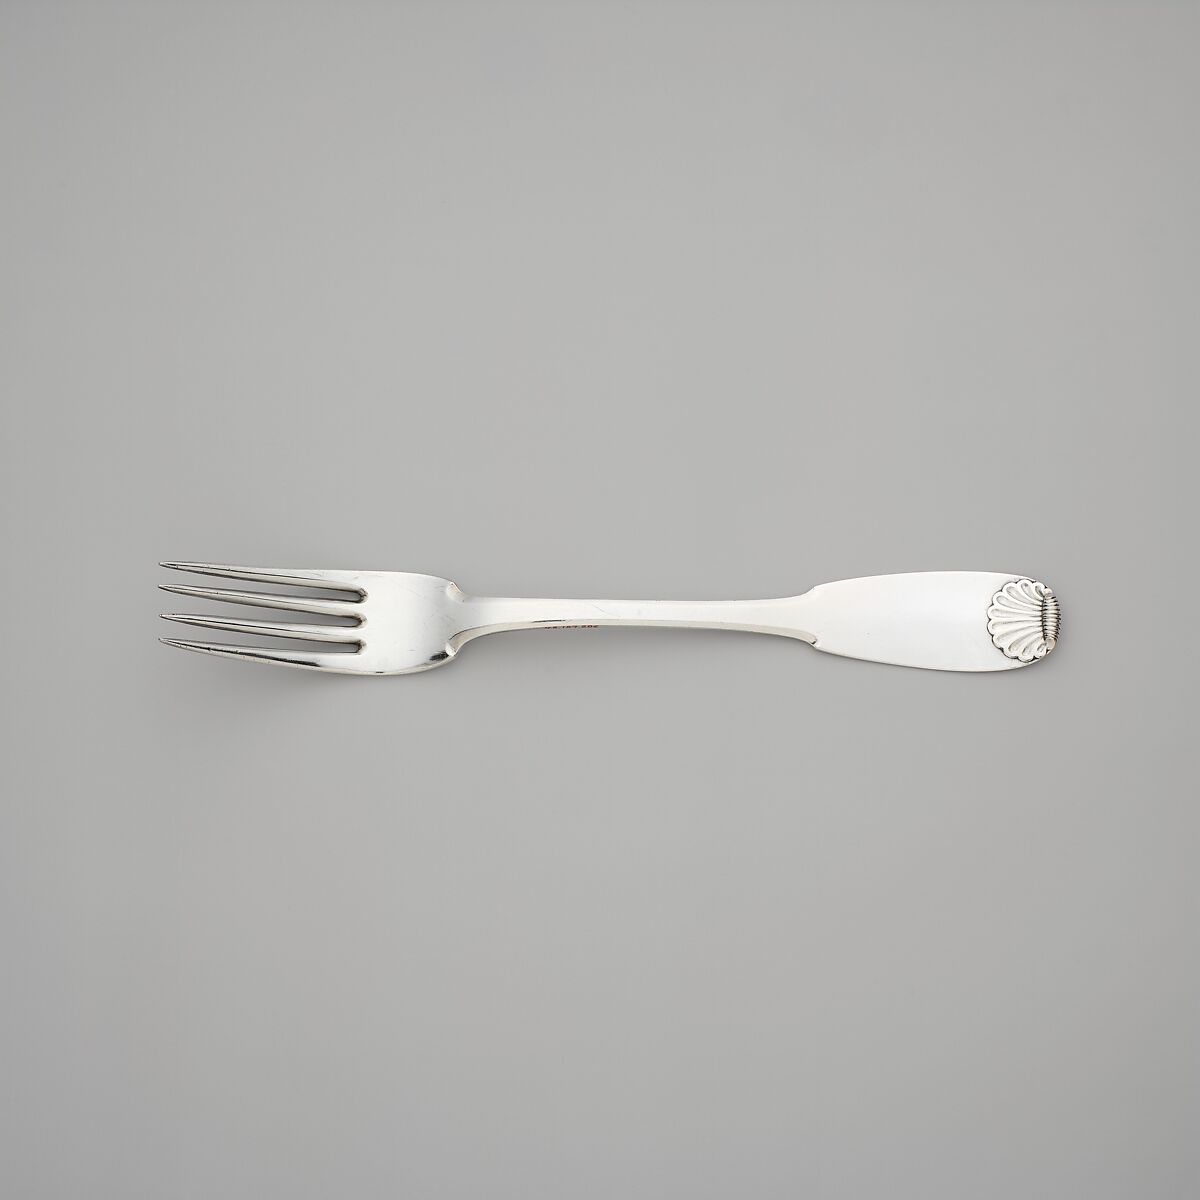 Serving fork, Melchior Latil (master 1748, died 1782), Silver, French, Draguignan (Aix Mint) 